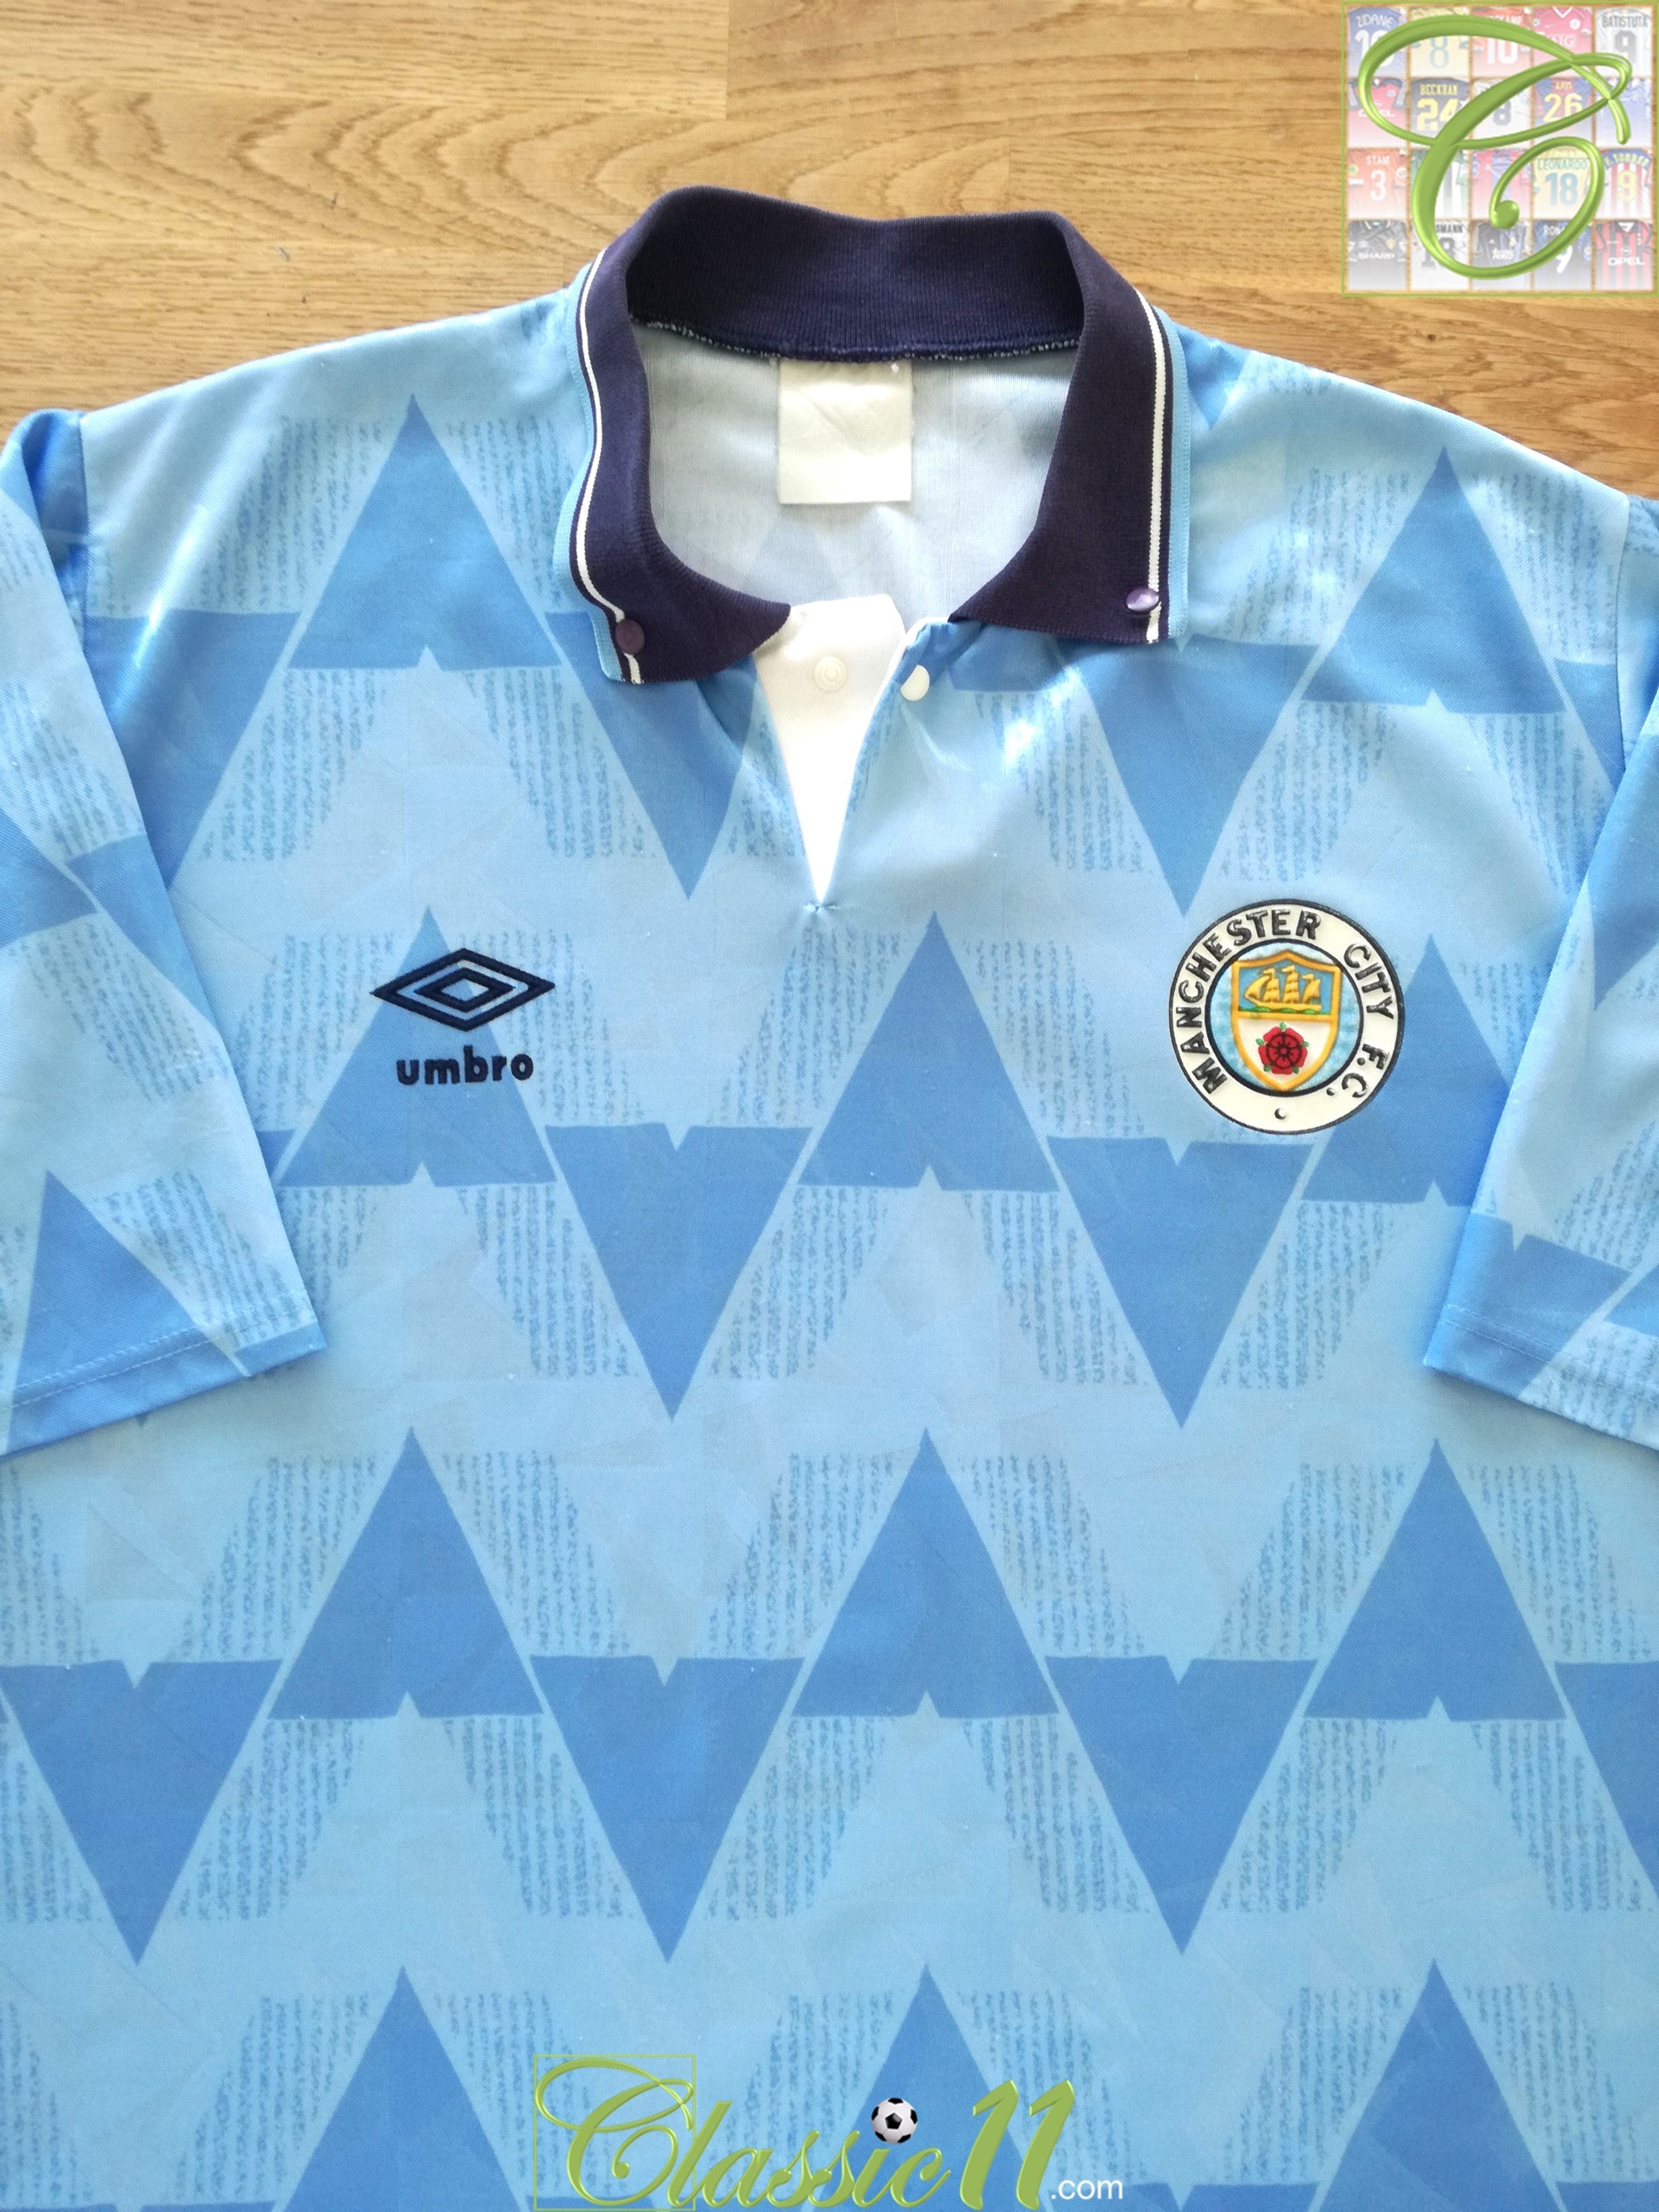 1989/90 Man City Home Football Shirt / Old Vintage Umbro Soccer